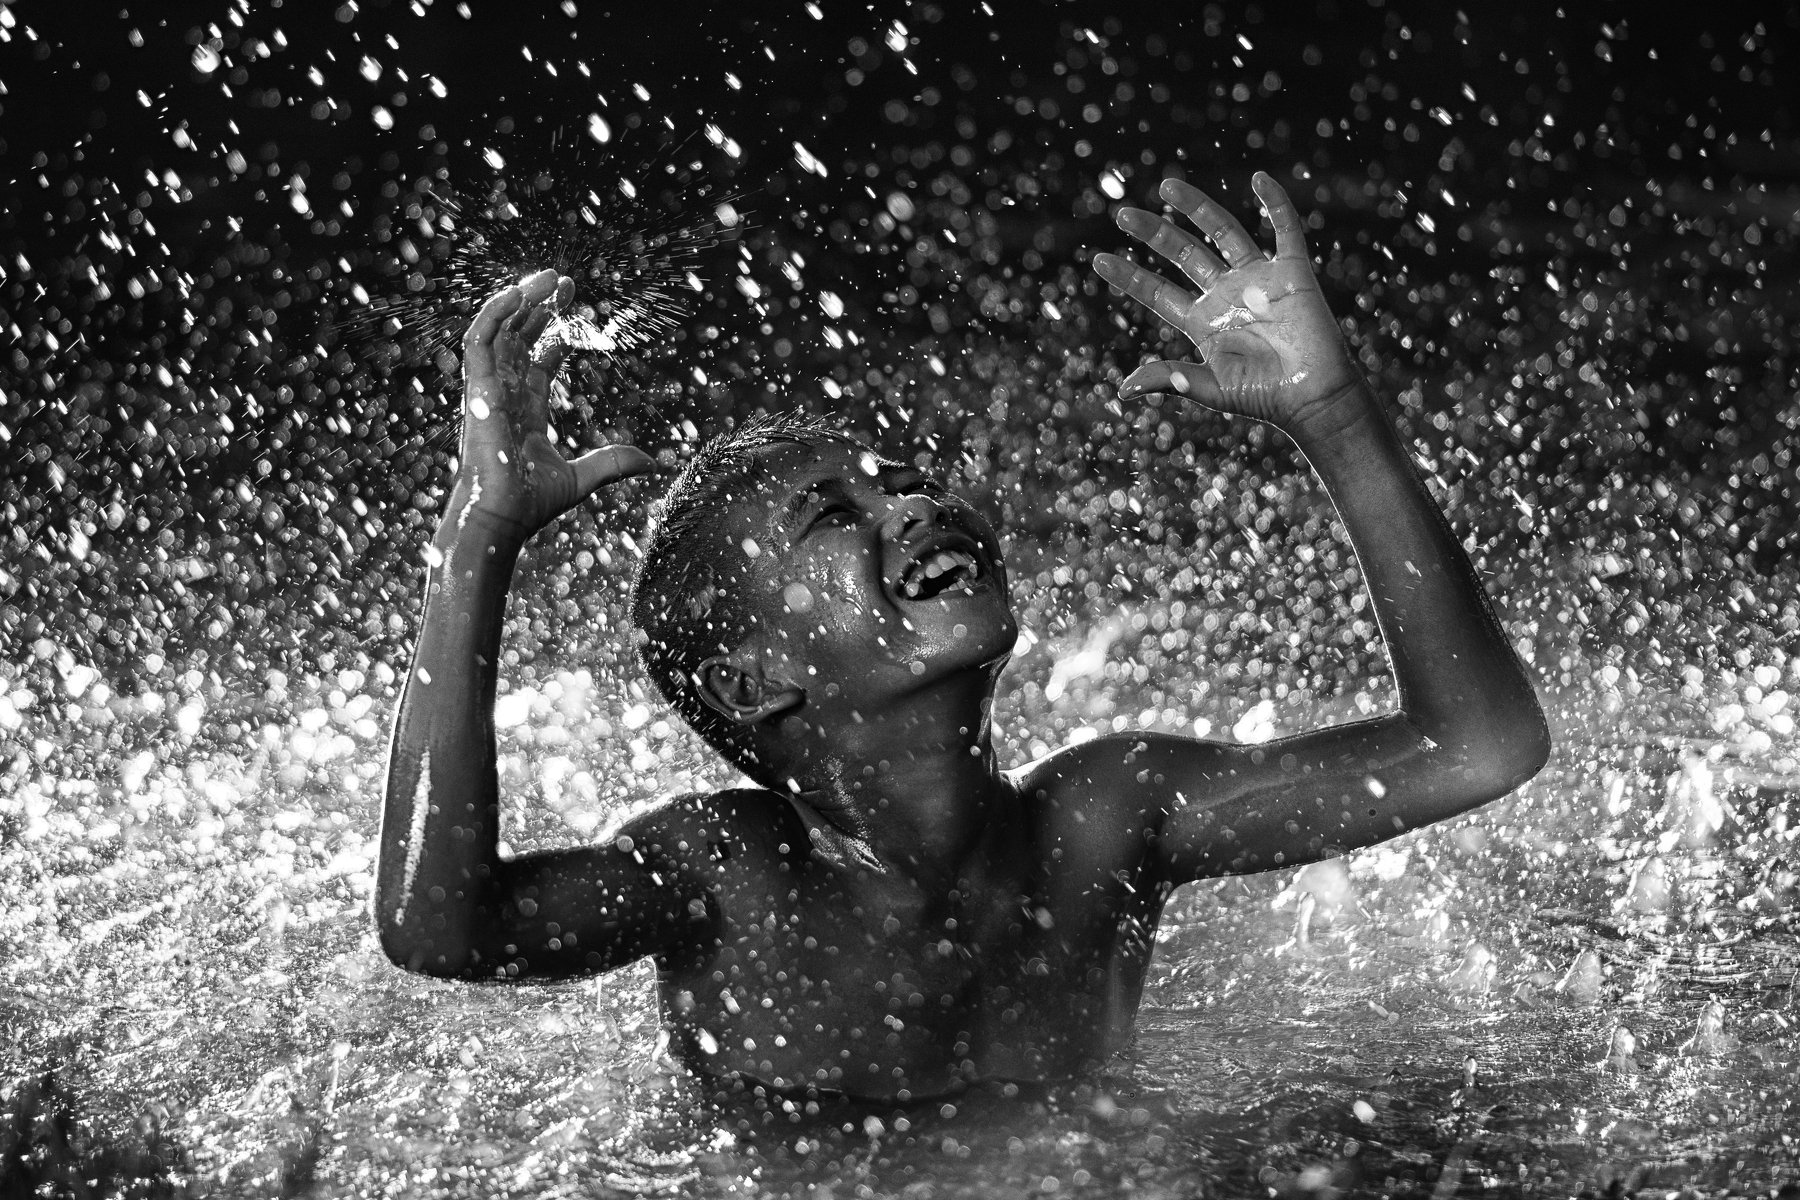 Hope,boy,water,rain, sarawut intarob